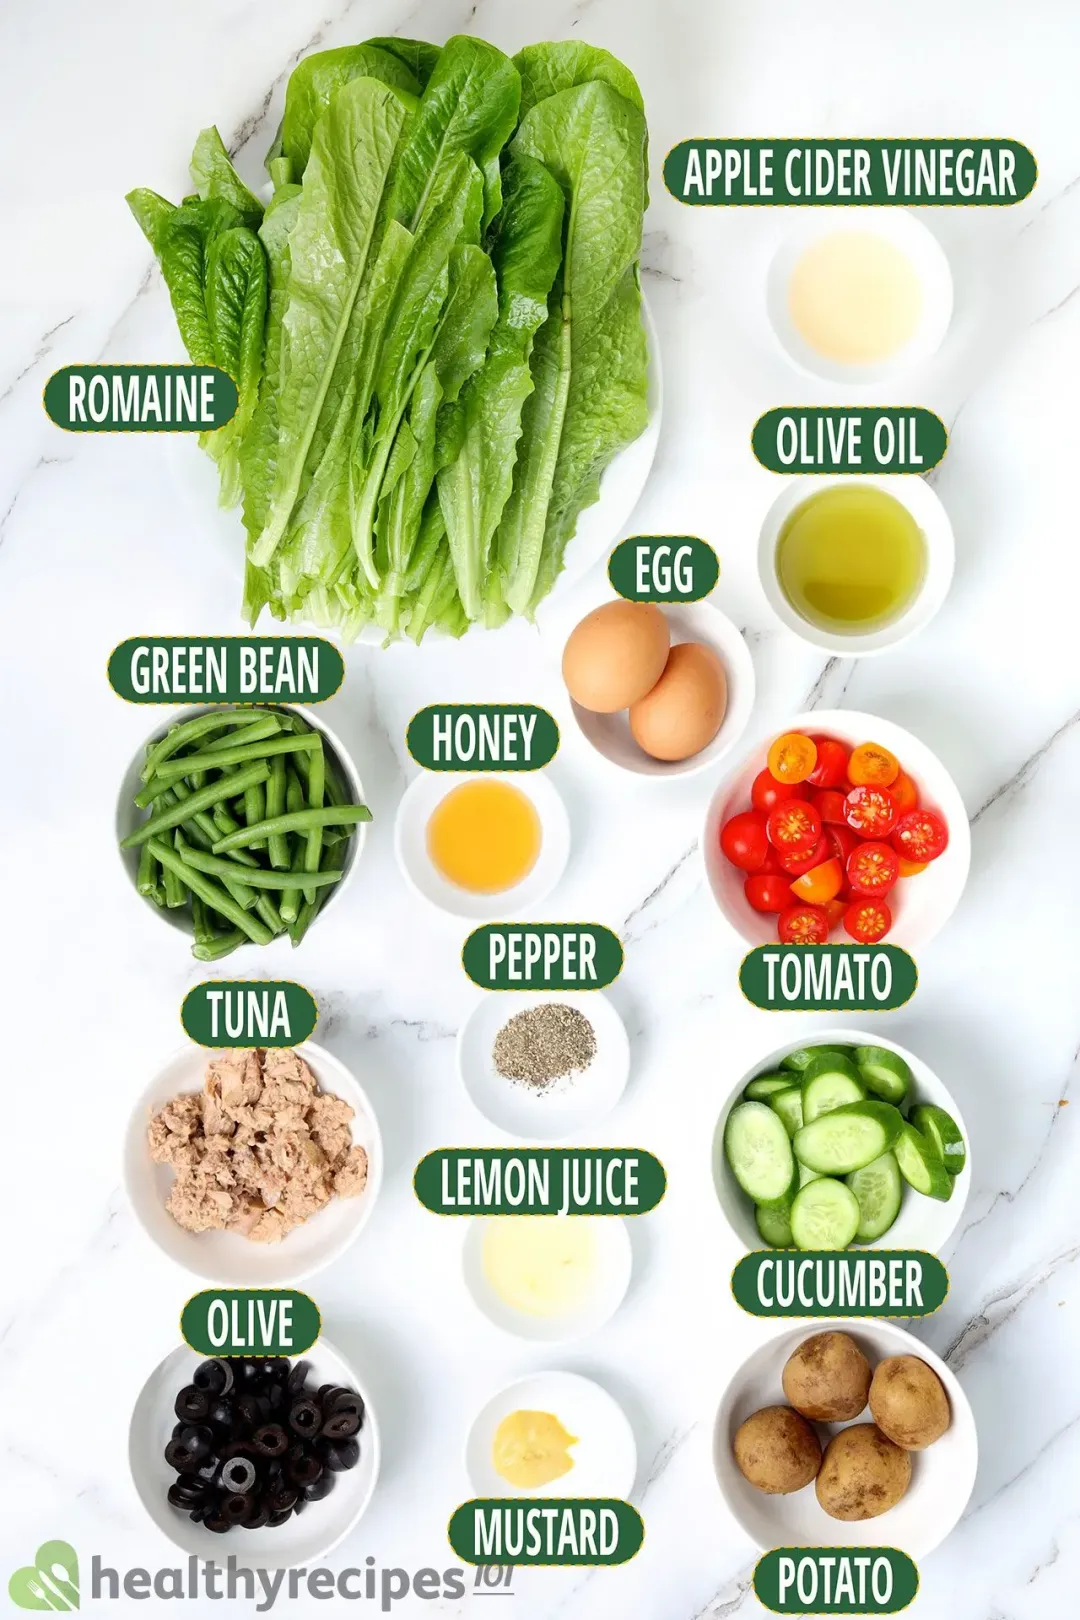 Nicoise Salad Recipe - A Satisfying Make-Ahead Salad